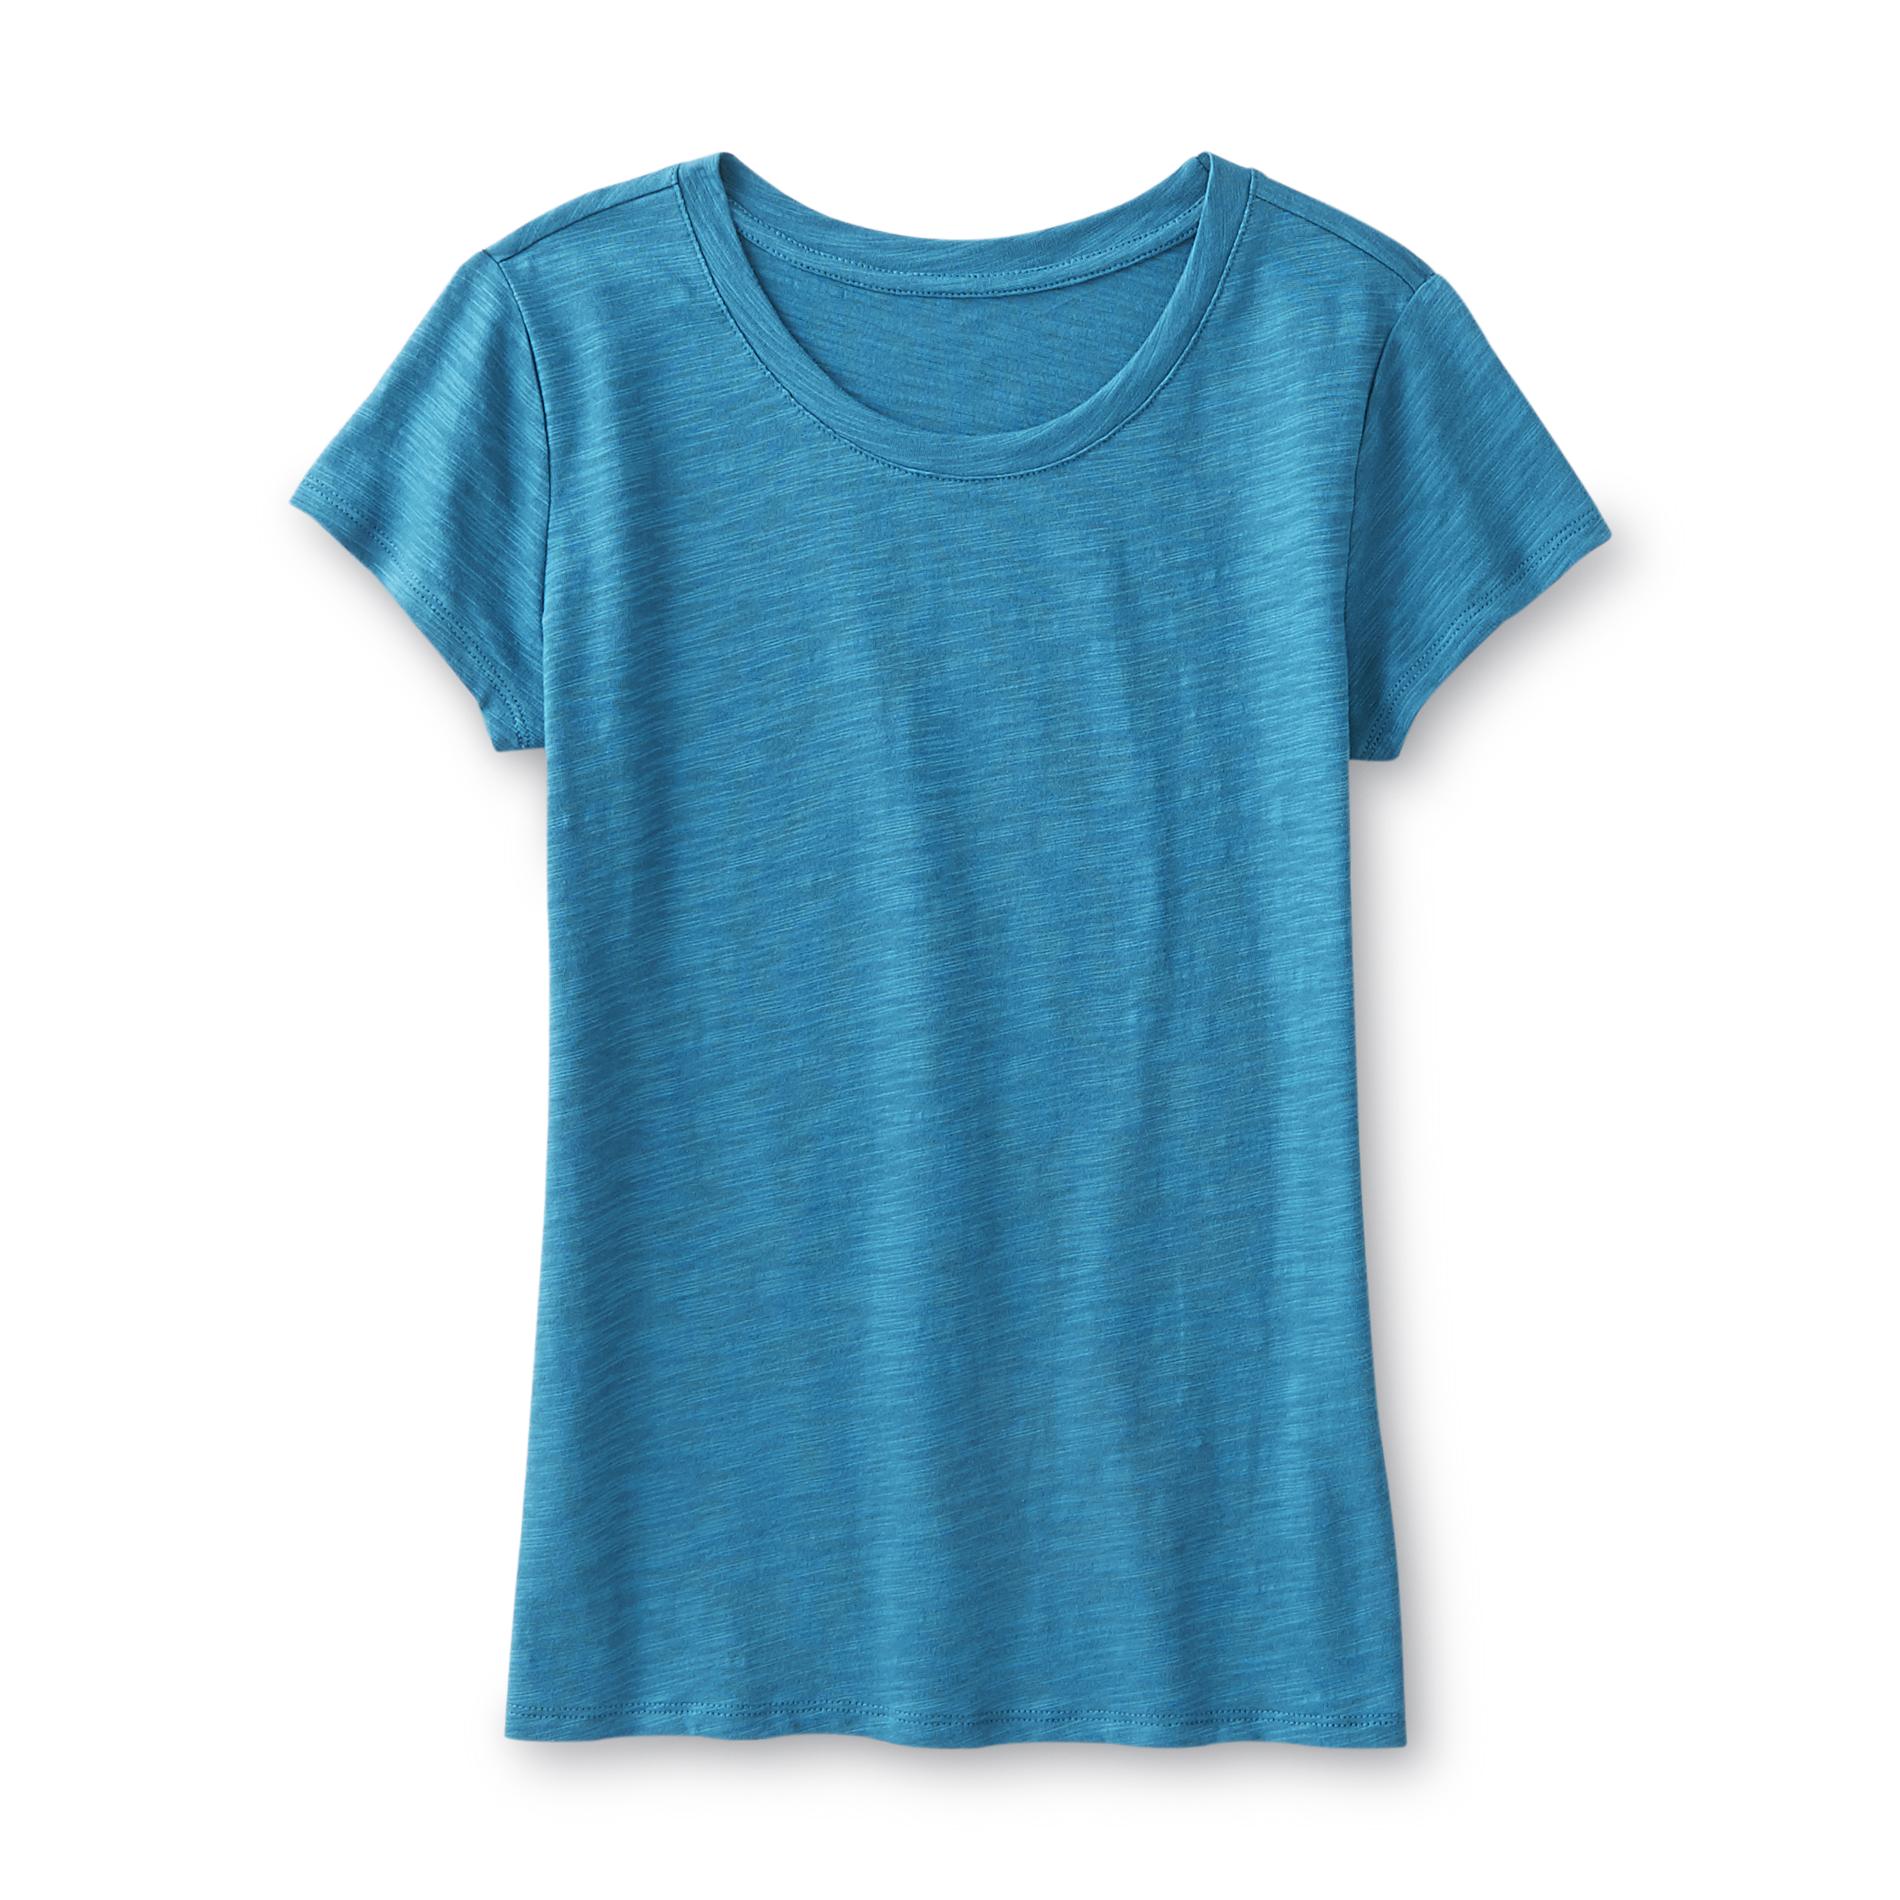 Simply Styled Girl's Slub Knit T-Shirt